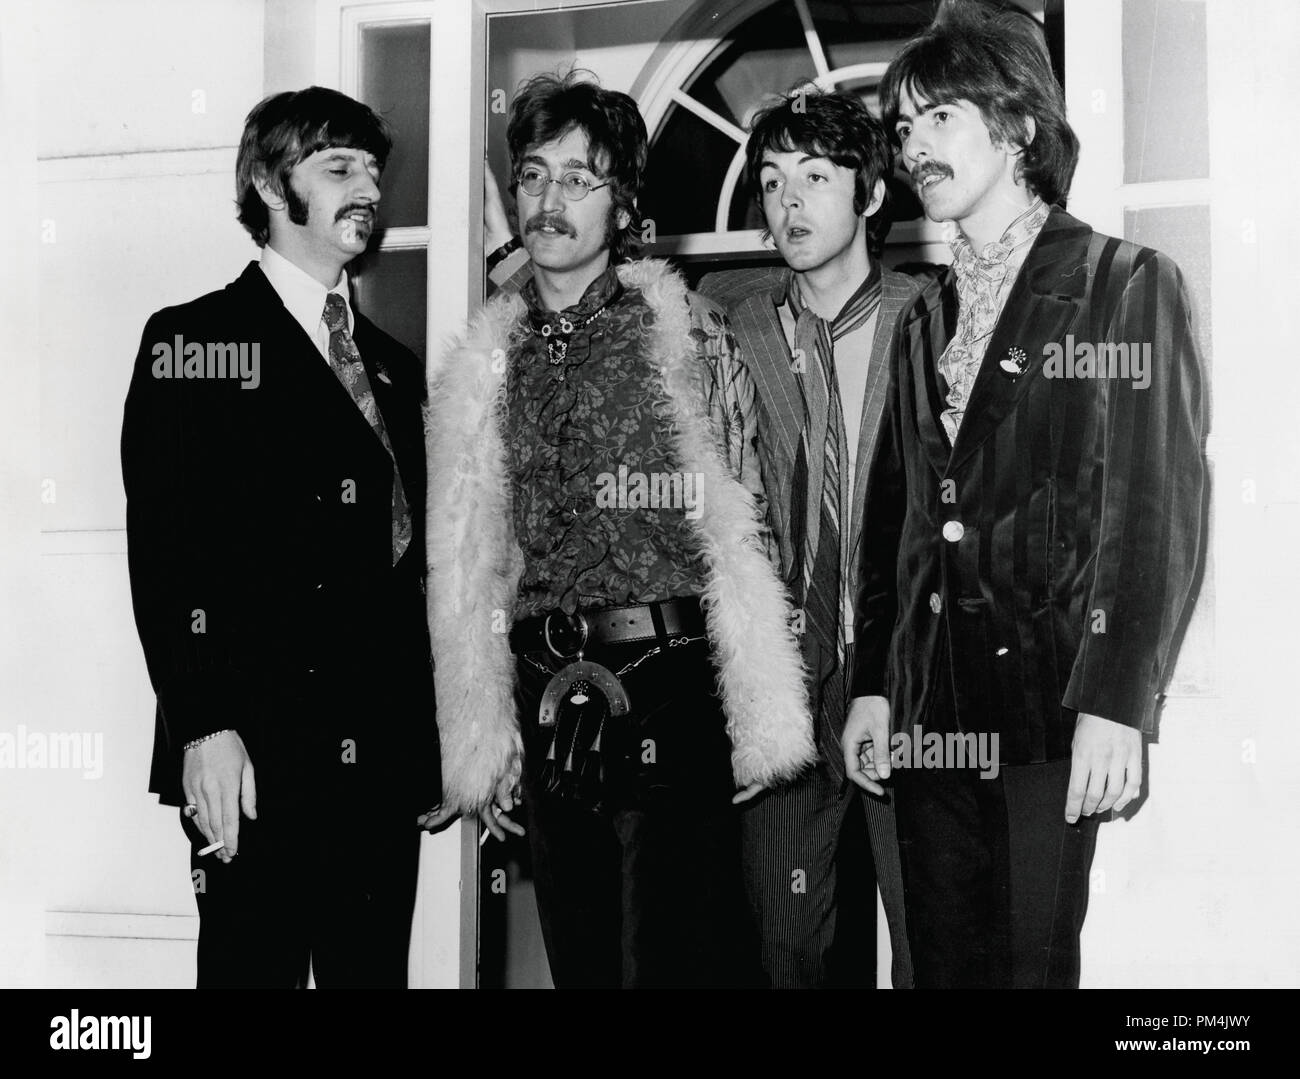 I Beatles Ringo Starr, John Lennon, Paul McCartney e George Harrison1967. Riferimento al file #1013 075 THA © CCR /Hollywood Archivio - Tutti i diritti riservati. Foto Stock